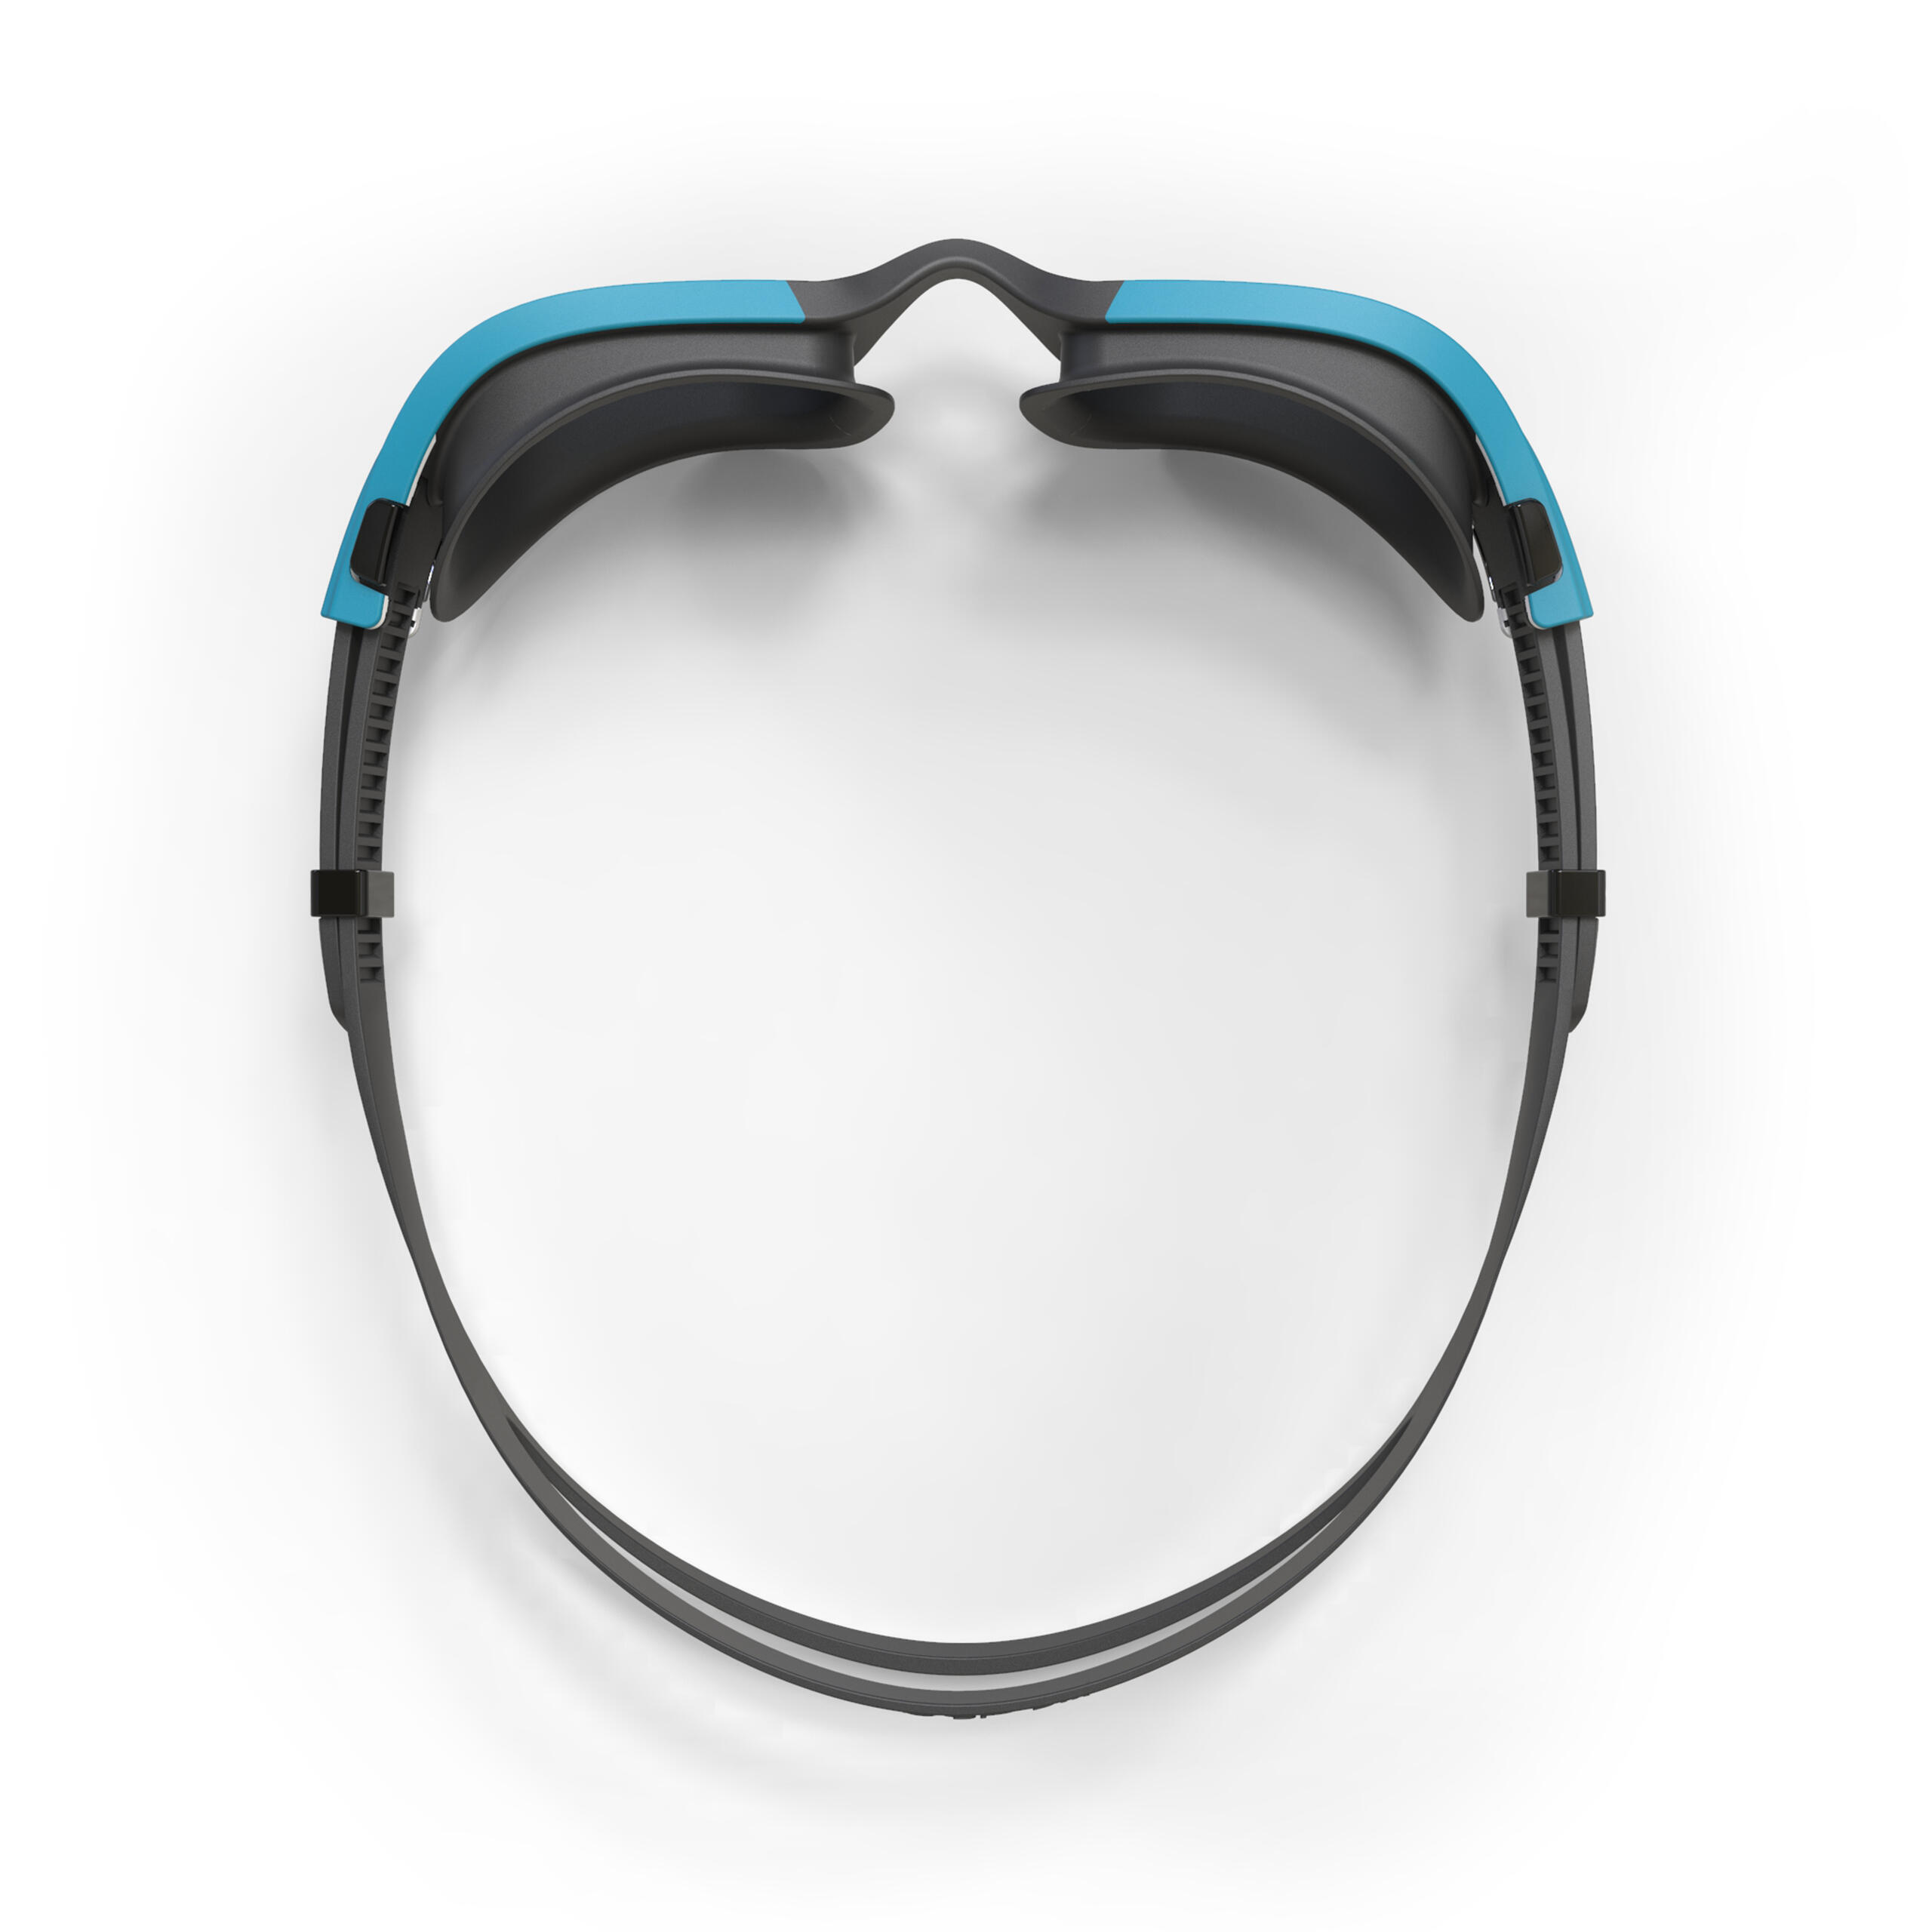 SPIRIT swimming goggles - Polarised lenses - Large size - Black blue 4/5